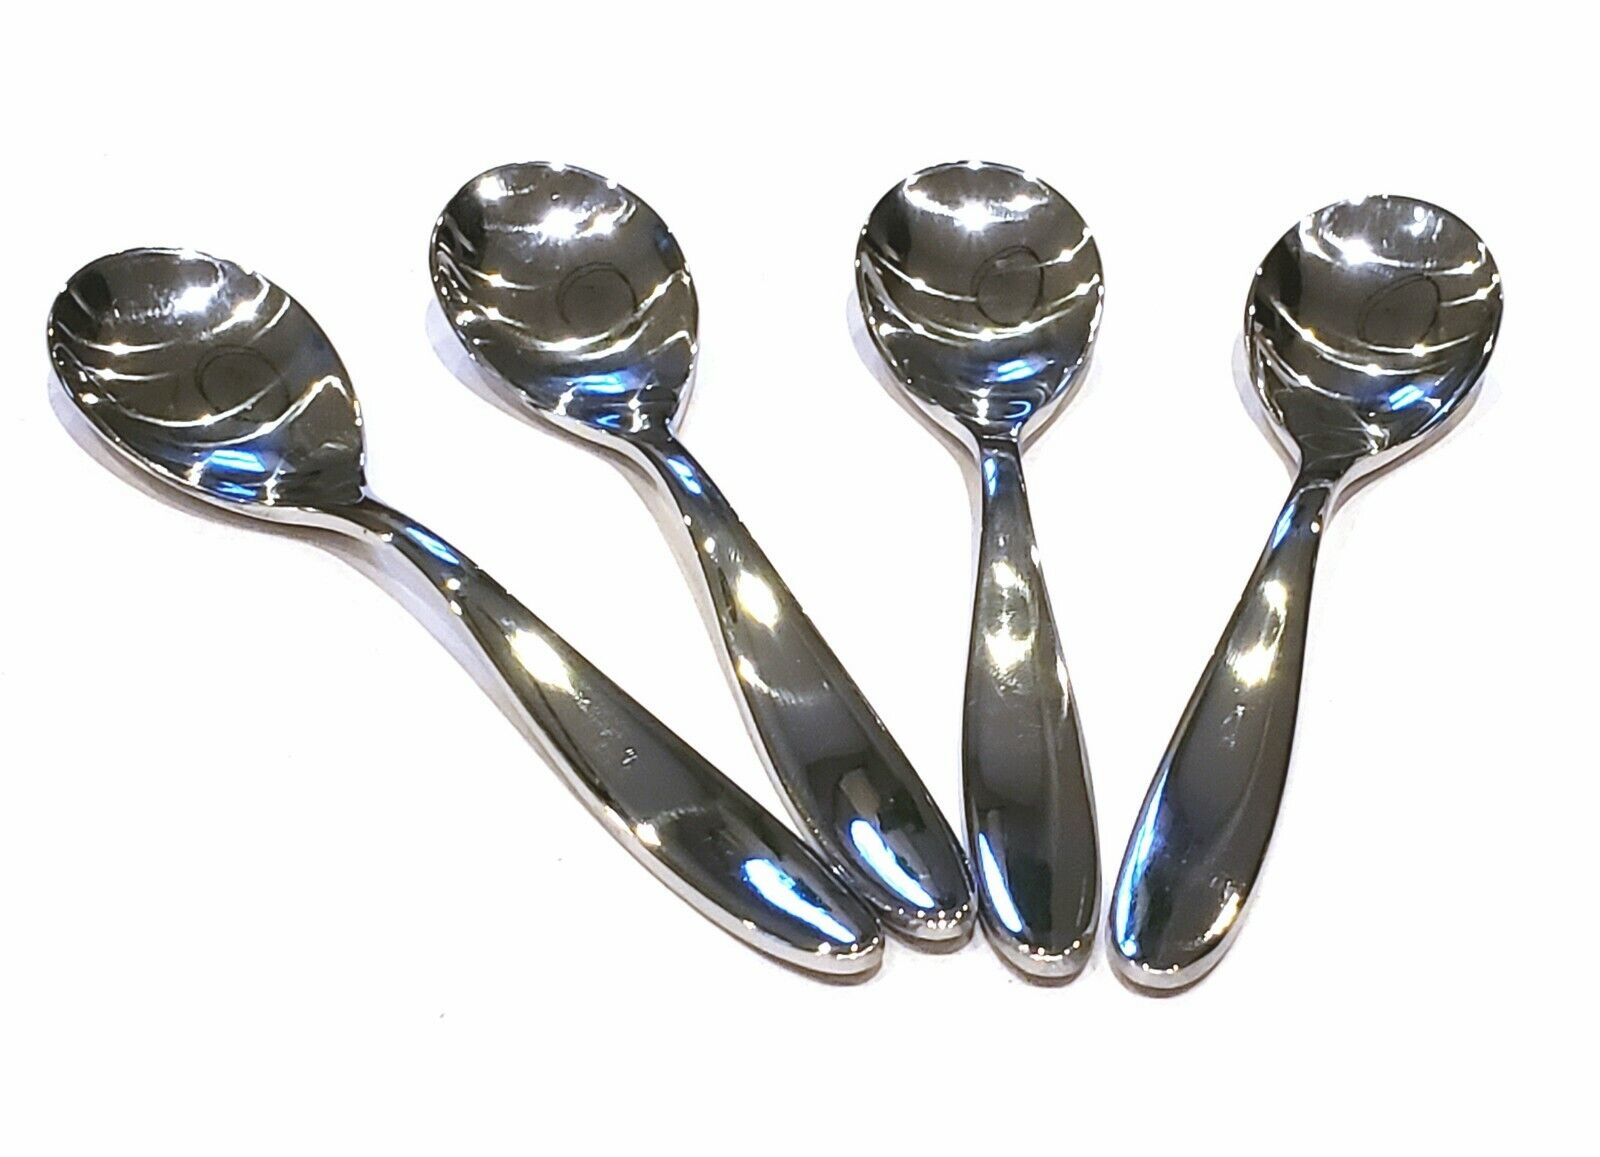 Alessi for Delta Stainless Steel Tea spoon  teaspoon set of 4 p/n 044206617